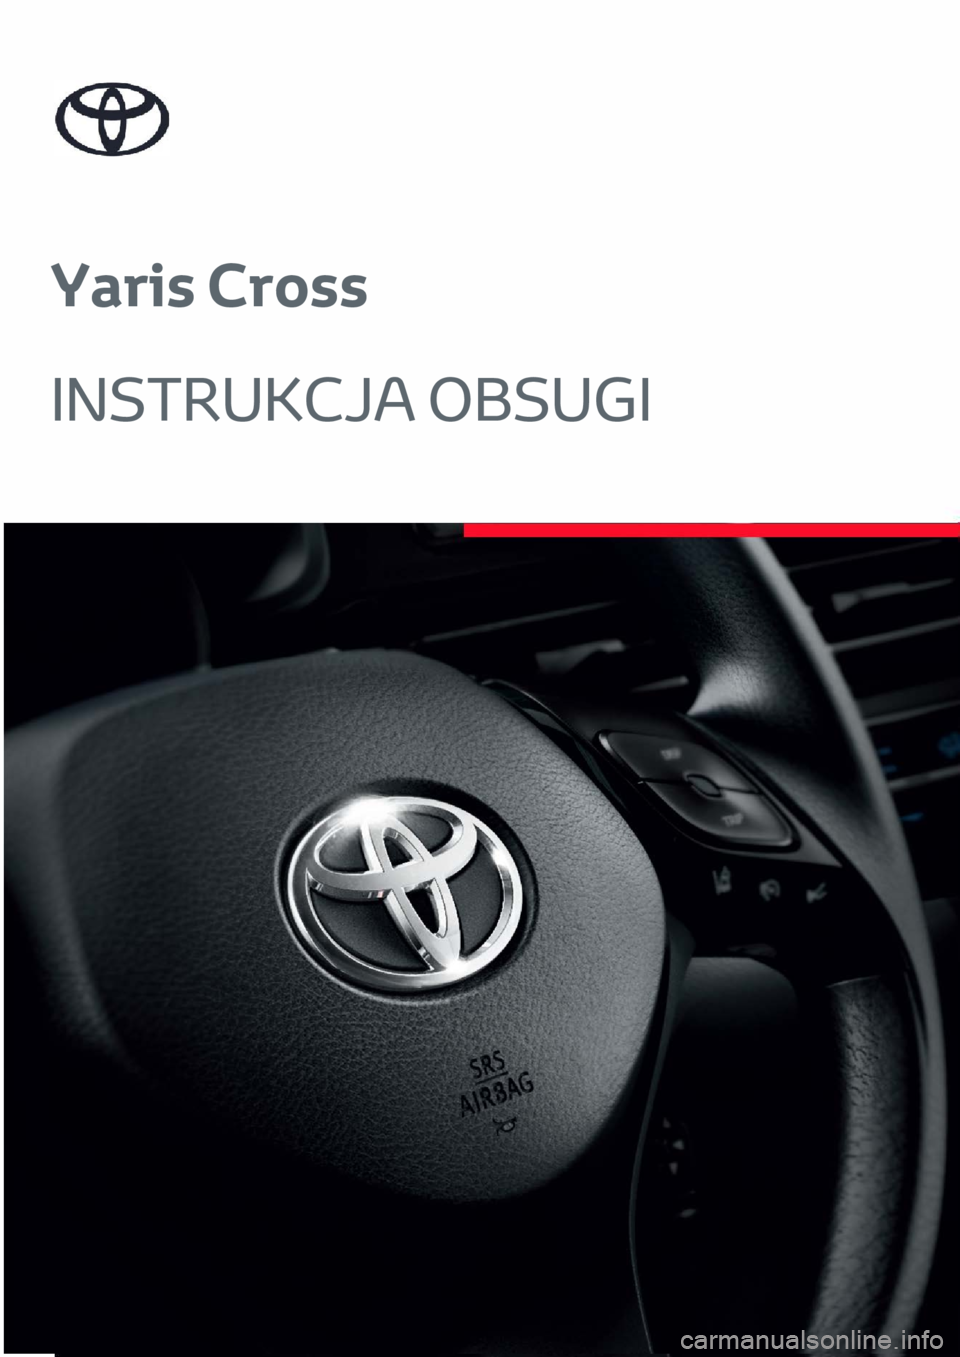 TOYOTA YARIS CROSS 2023  Instrukcja obsługi (in Polish) Yaris Cross
INSTRUKCJA OBSUGI 